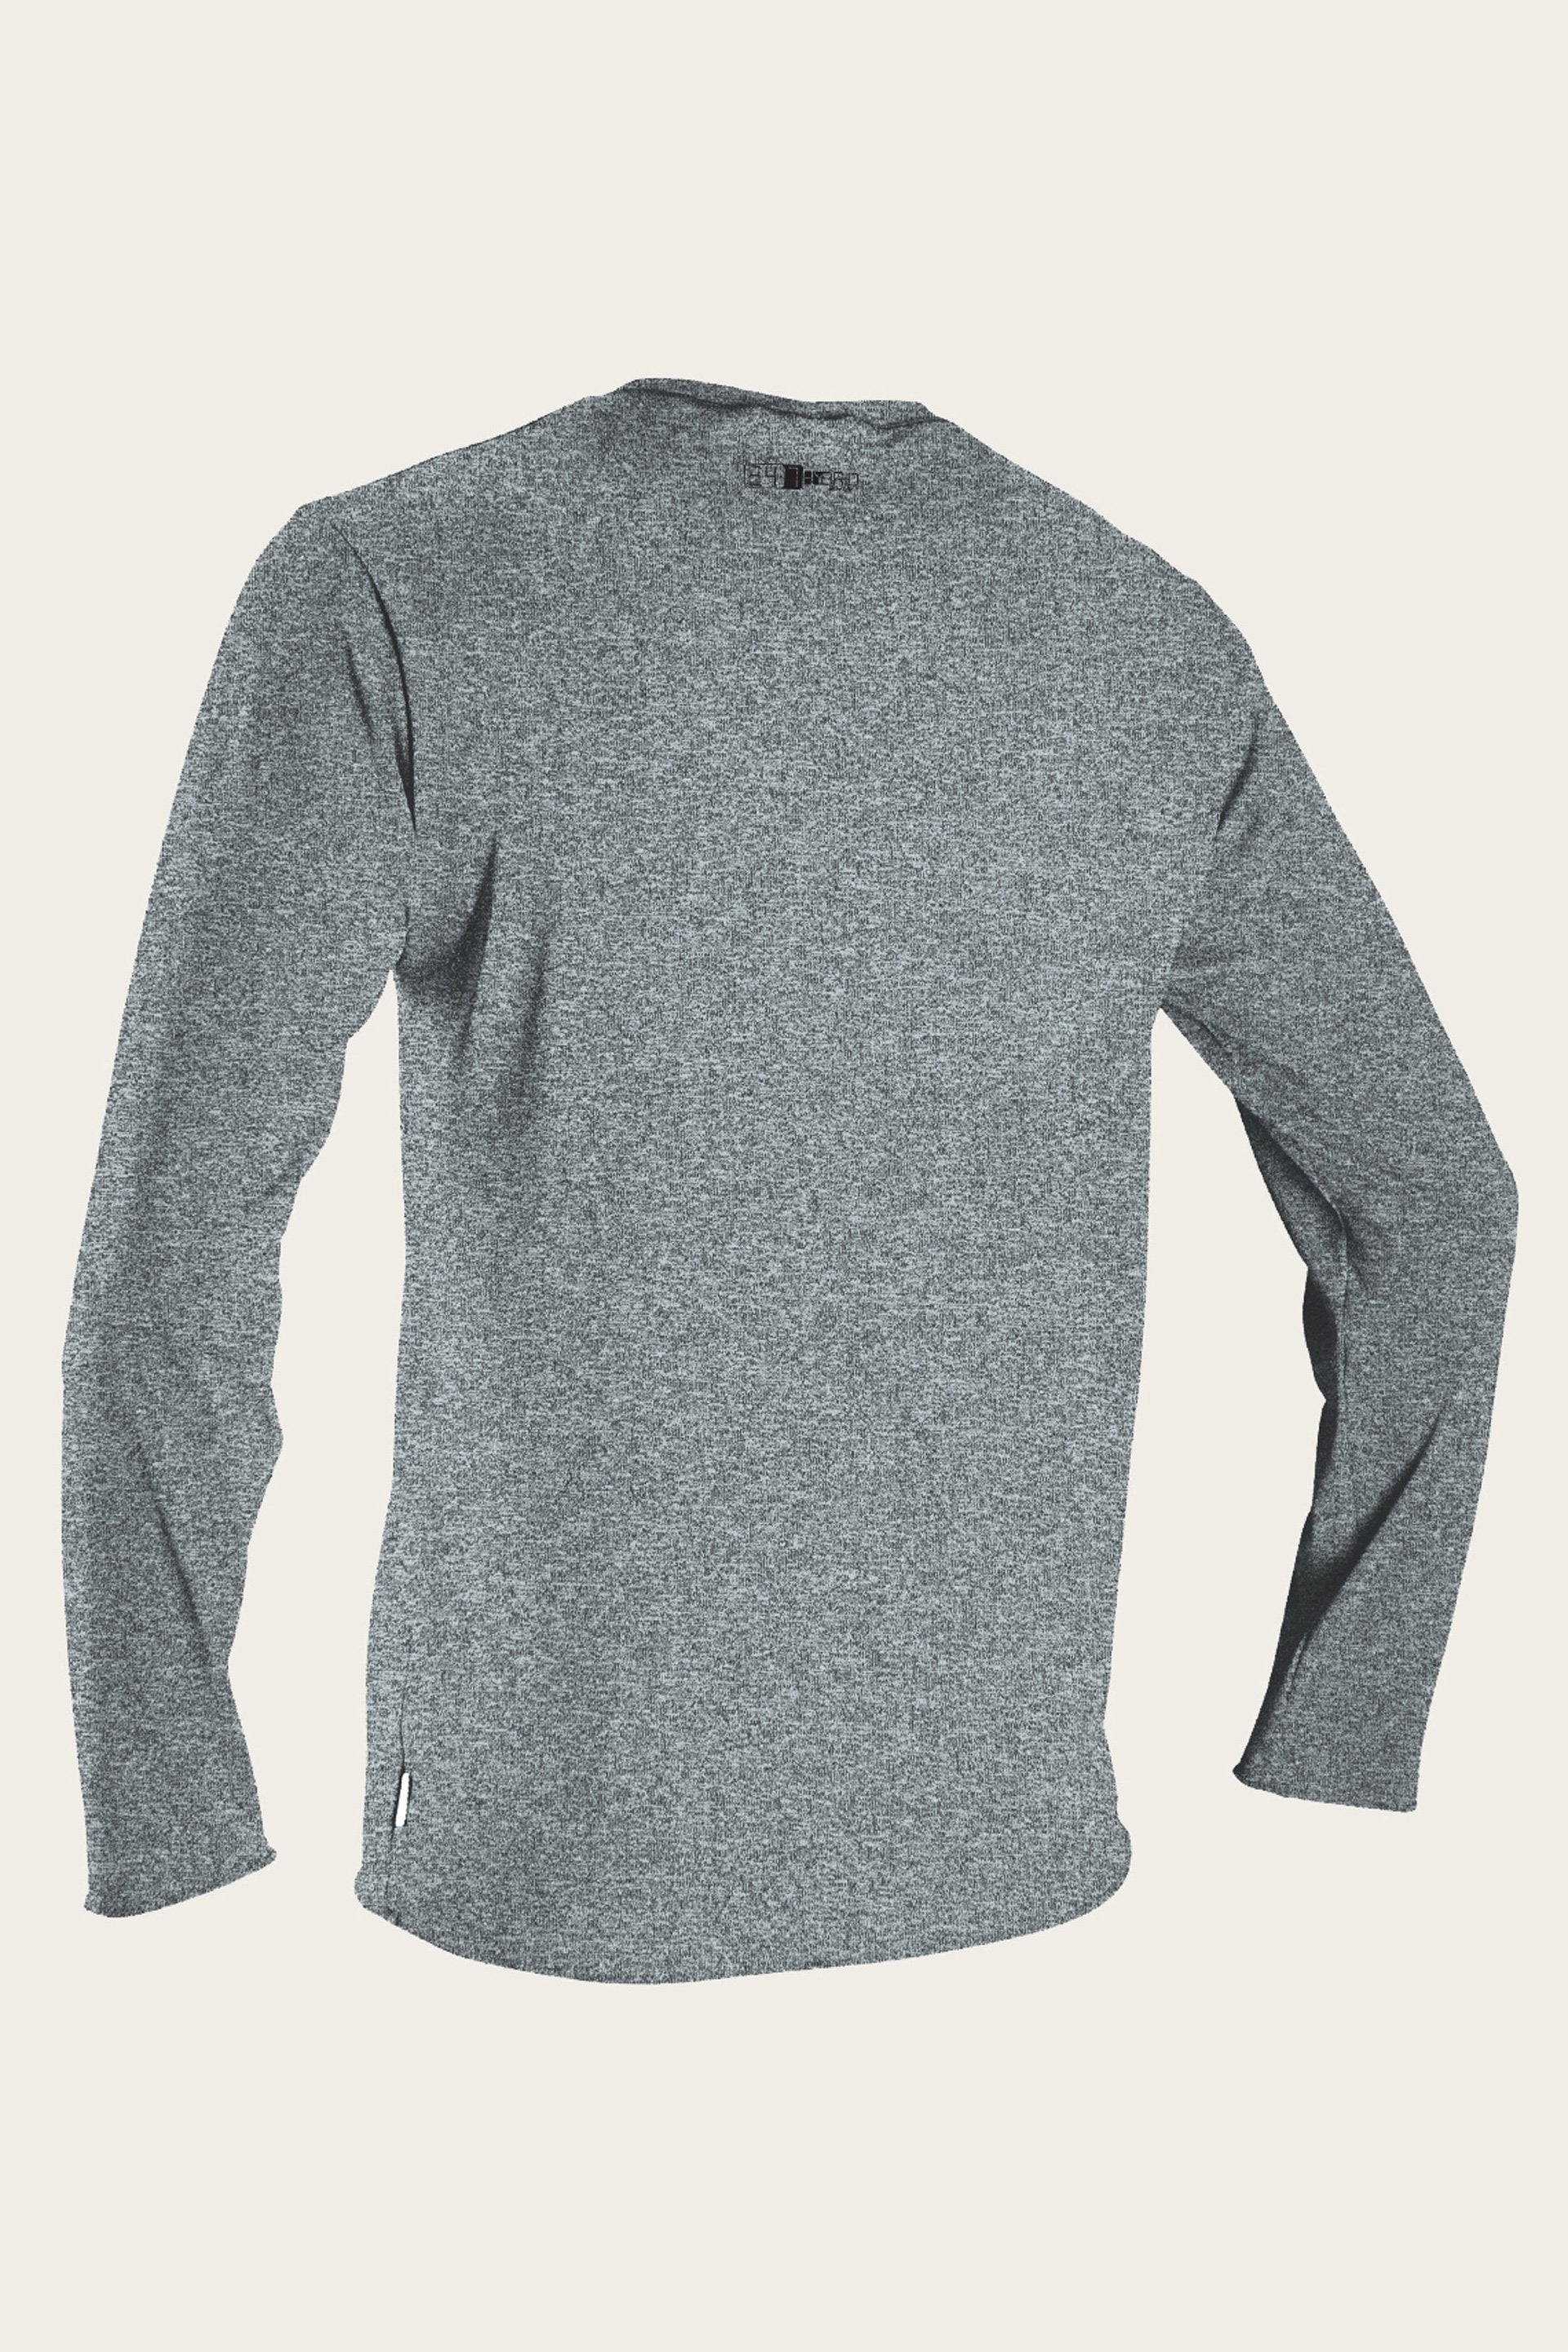 O'Neill Youth Hybrid LS Sun Shirt 271-Cool Grey 14